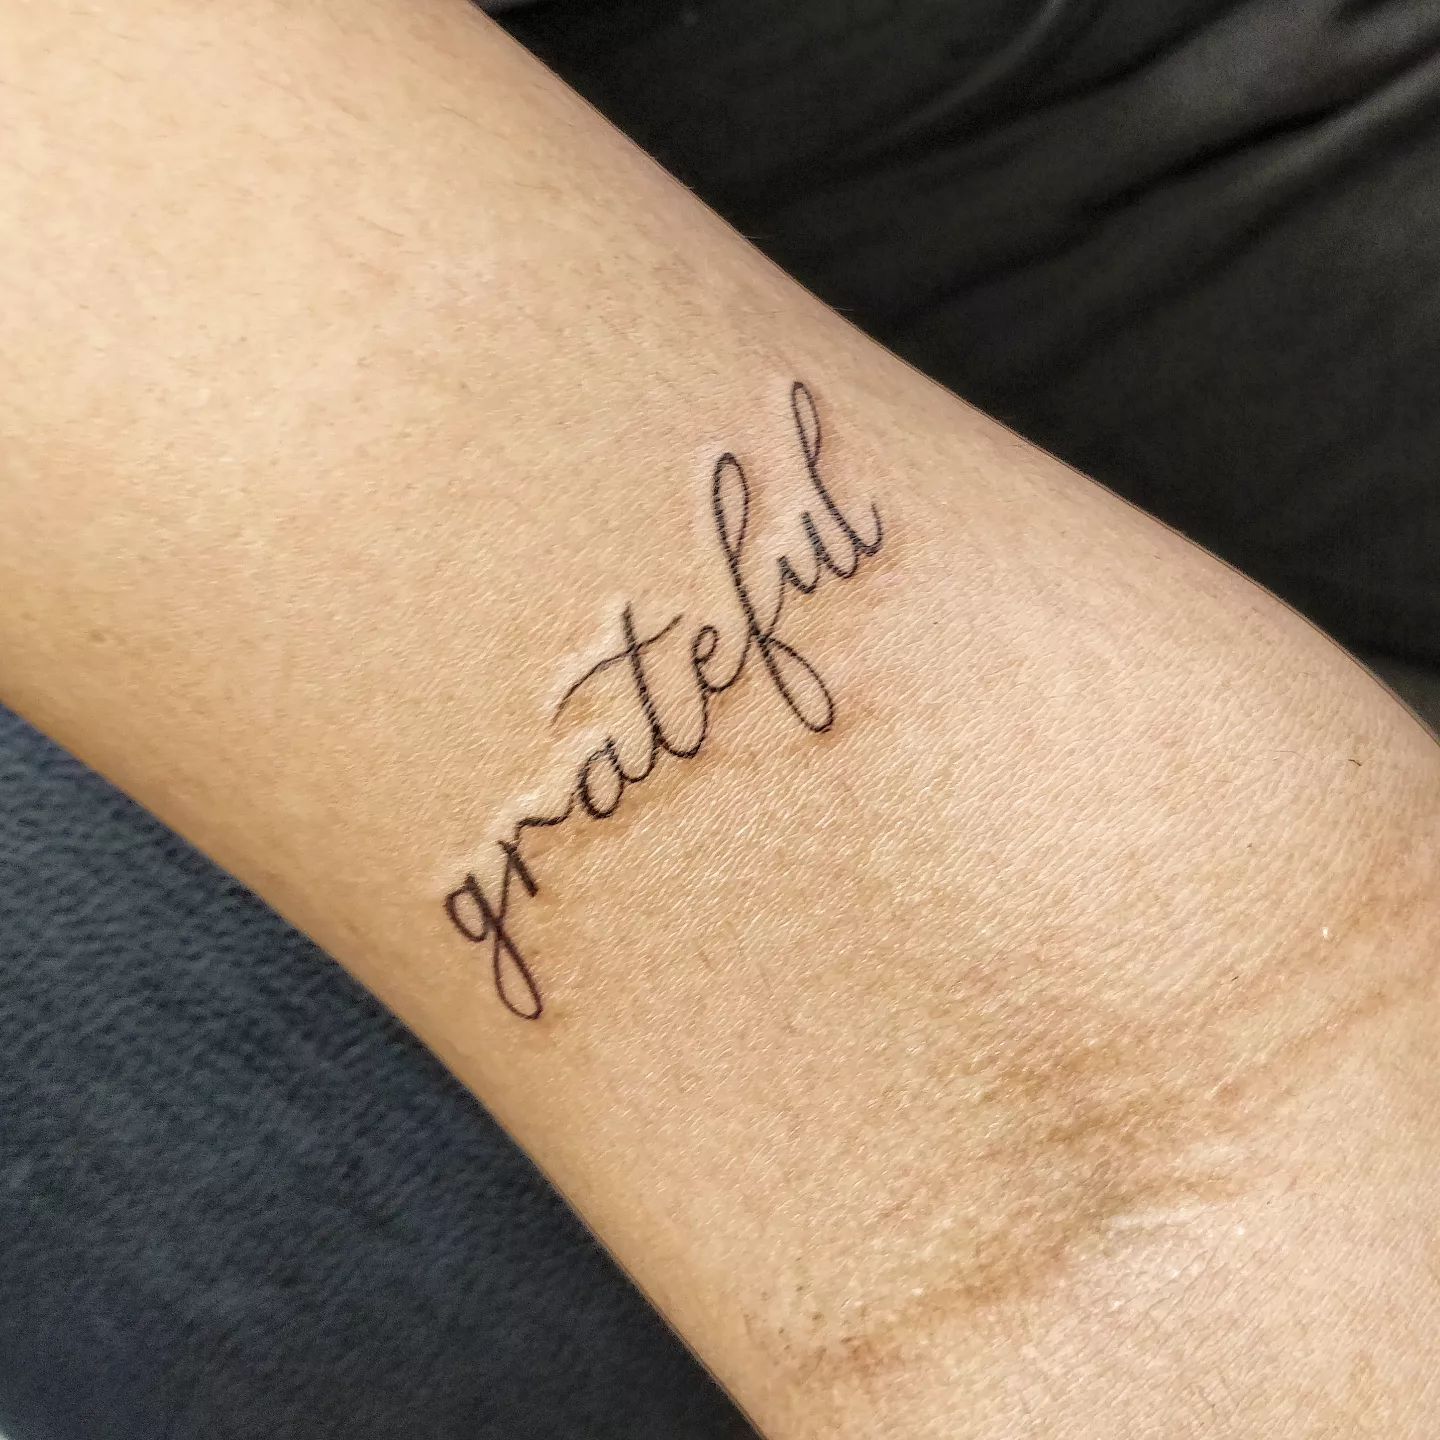 Tatuaje agradecido de una sola palabra.